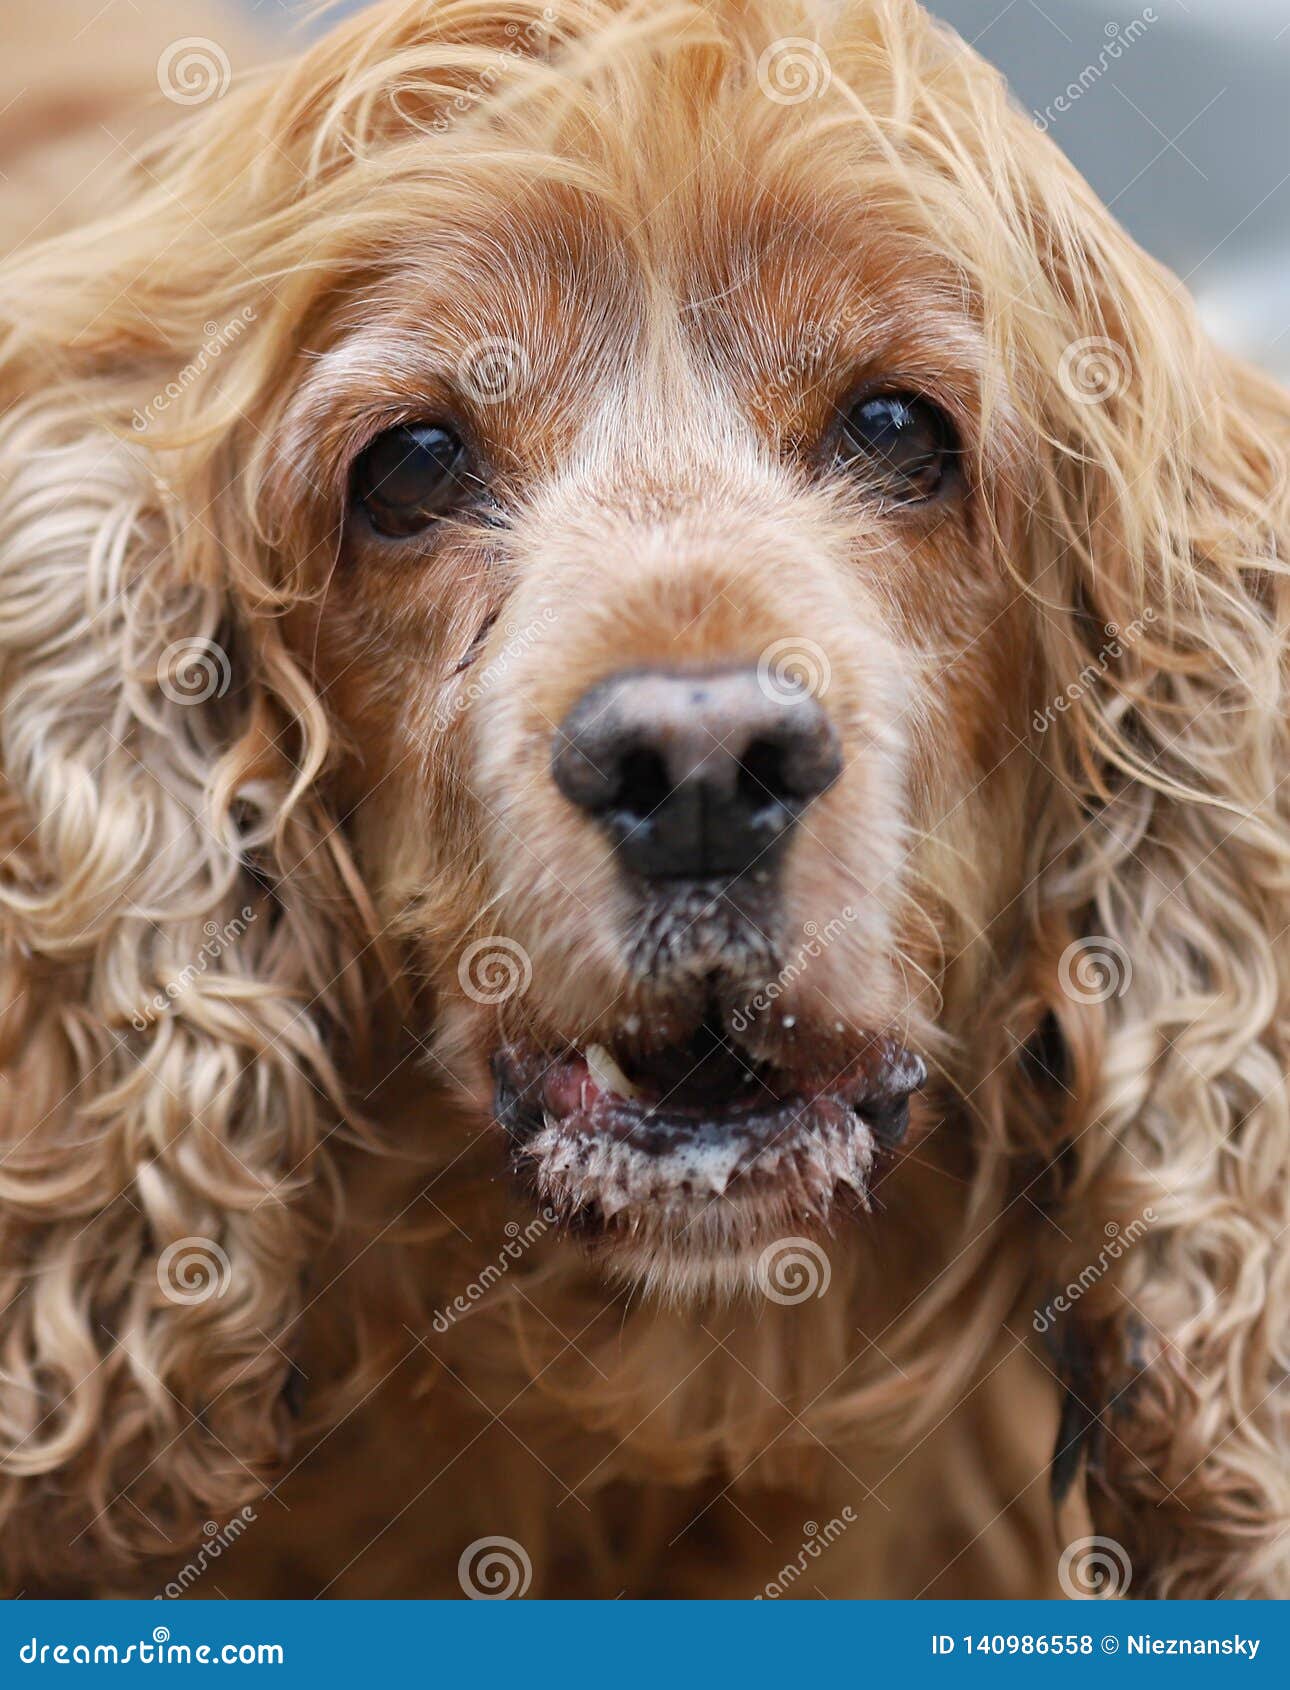 Dog, portrait of a spaniel stock photo. Image of eyes - 140986558